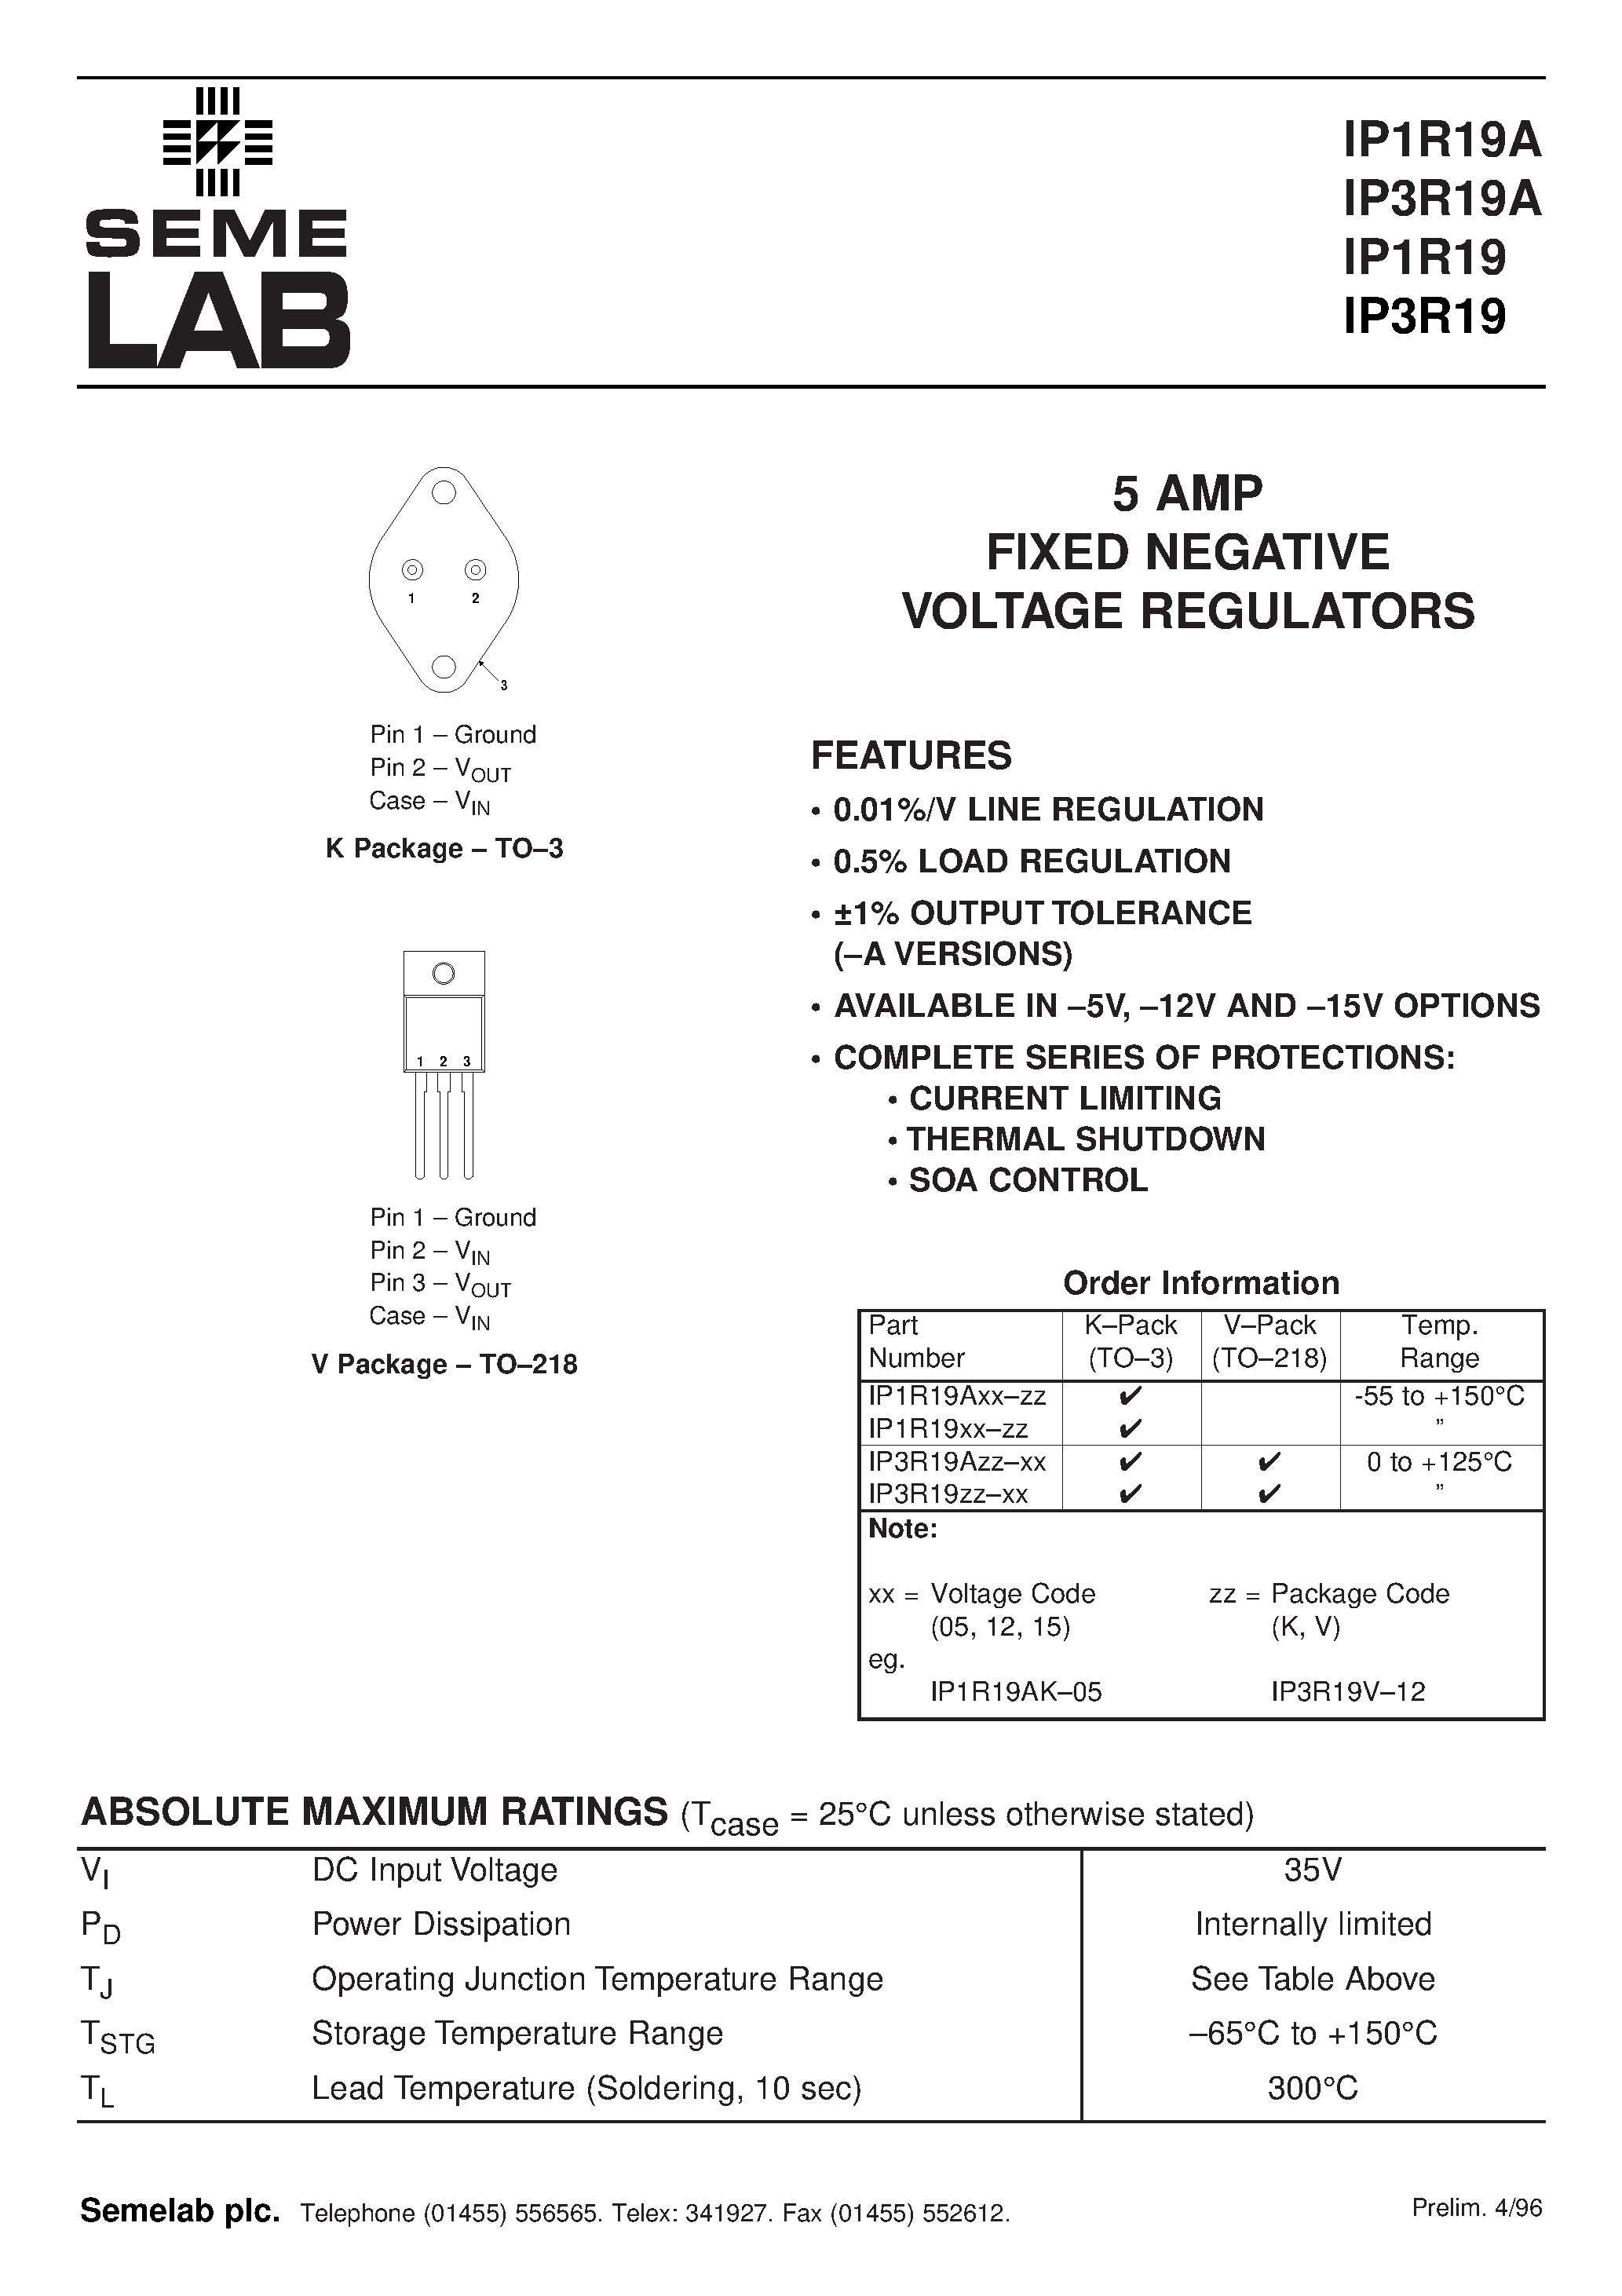 Datasheet IP1R19A12-K - 5 AMP FIXED NEGATIVE VOLTAGE REGULATORS page 1